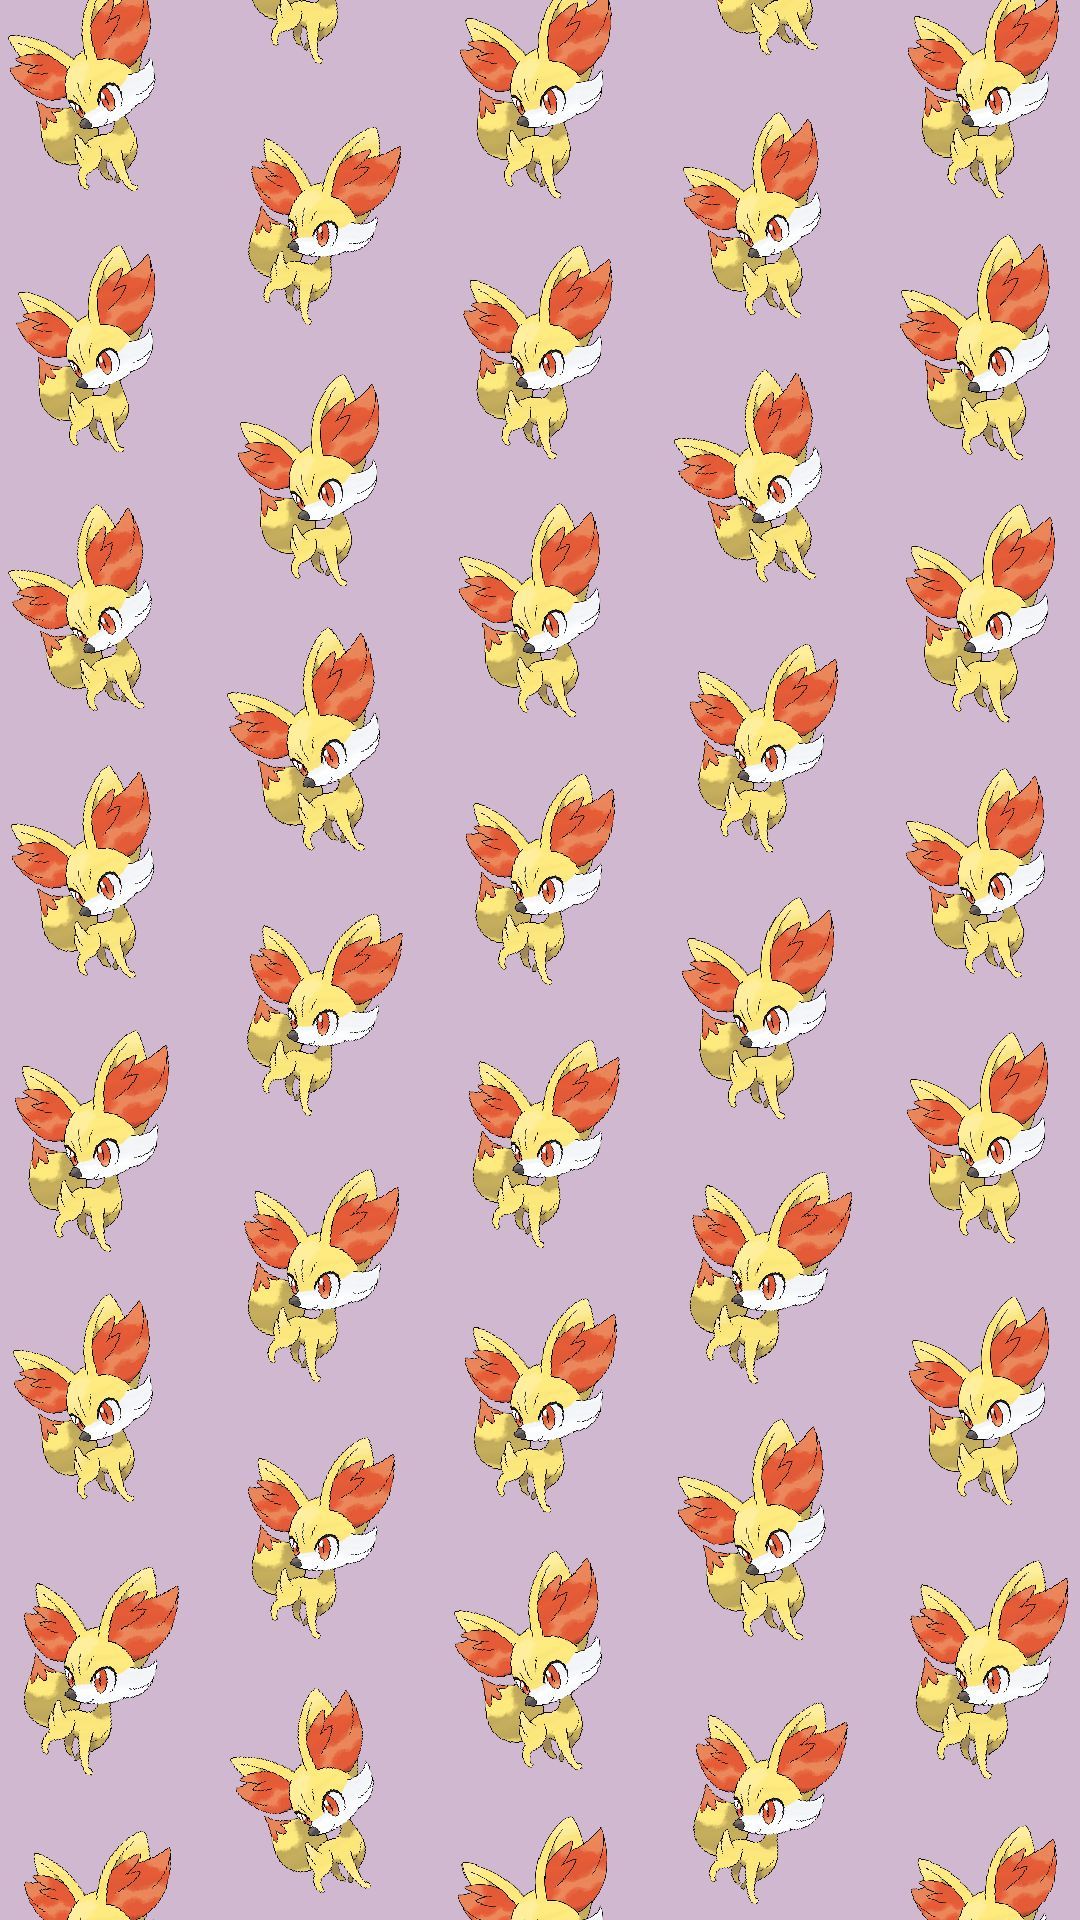 pokemon wallpaper tumblr,yellow,orange,butterfly,pattern,wrapping paper